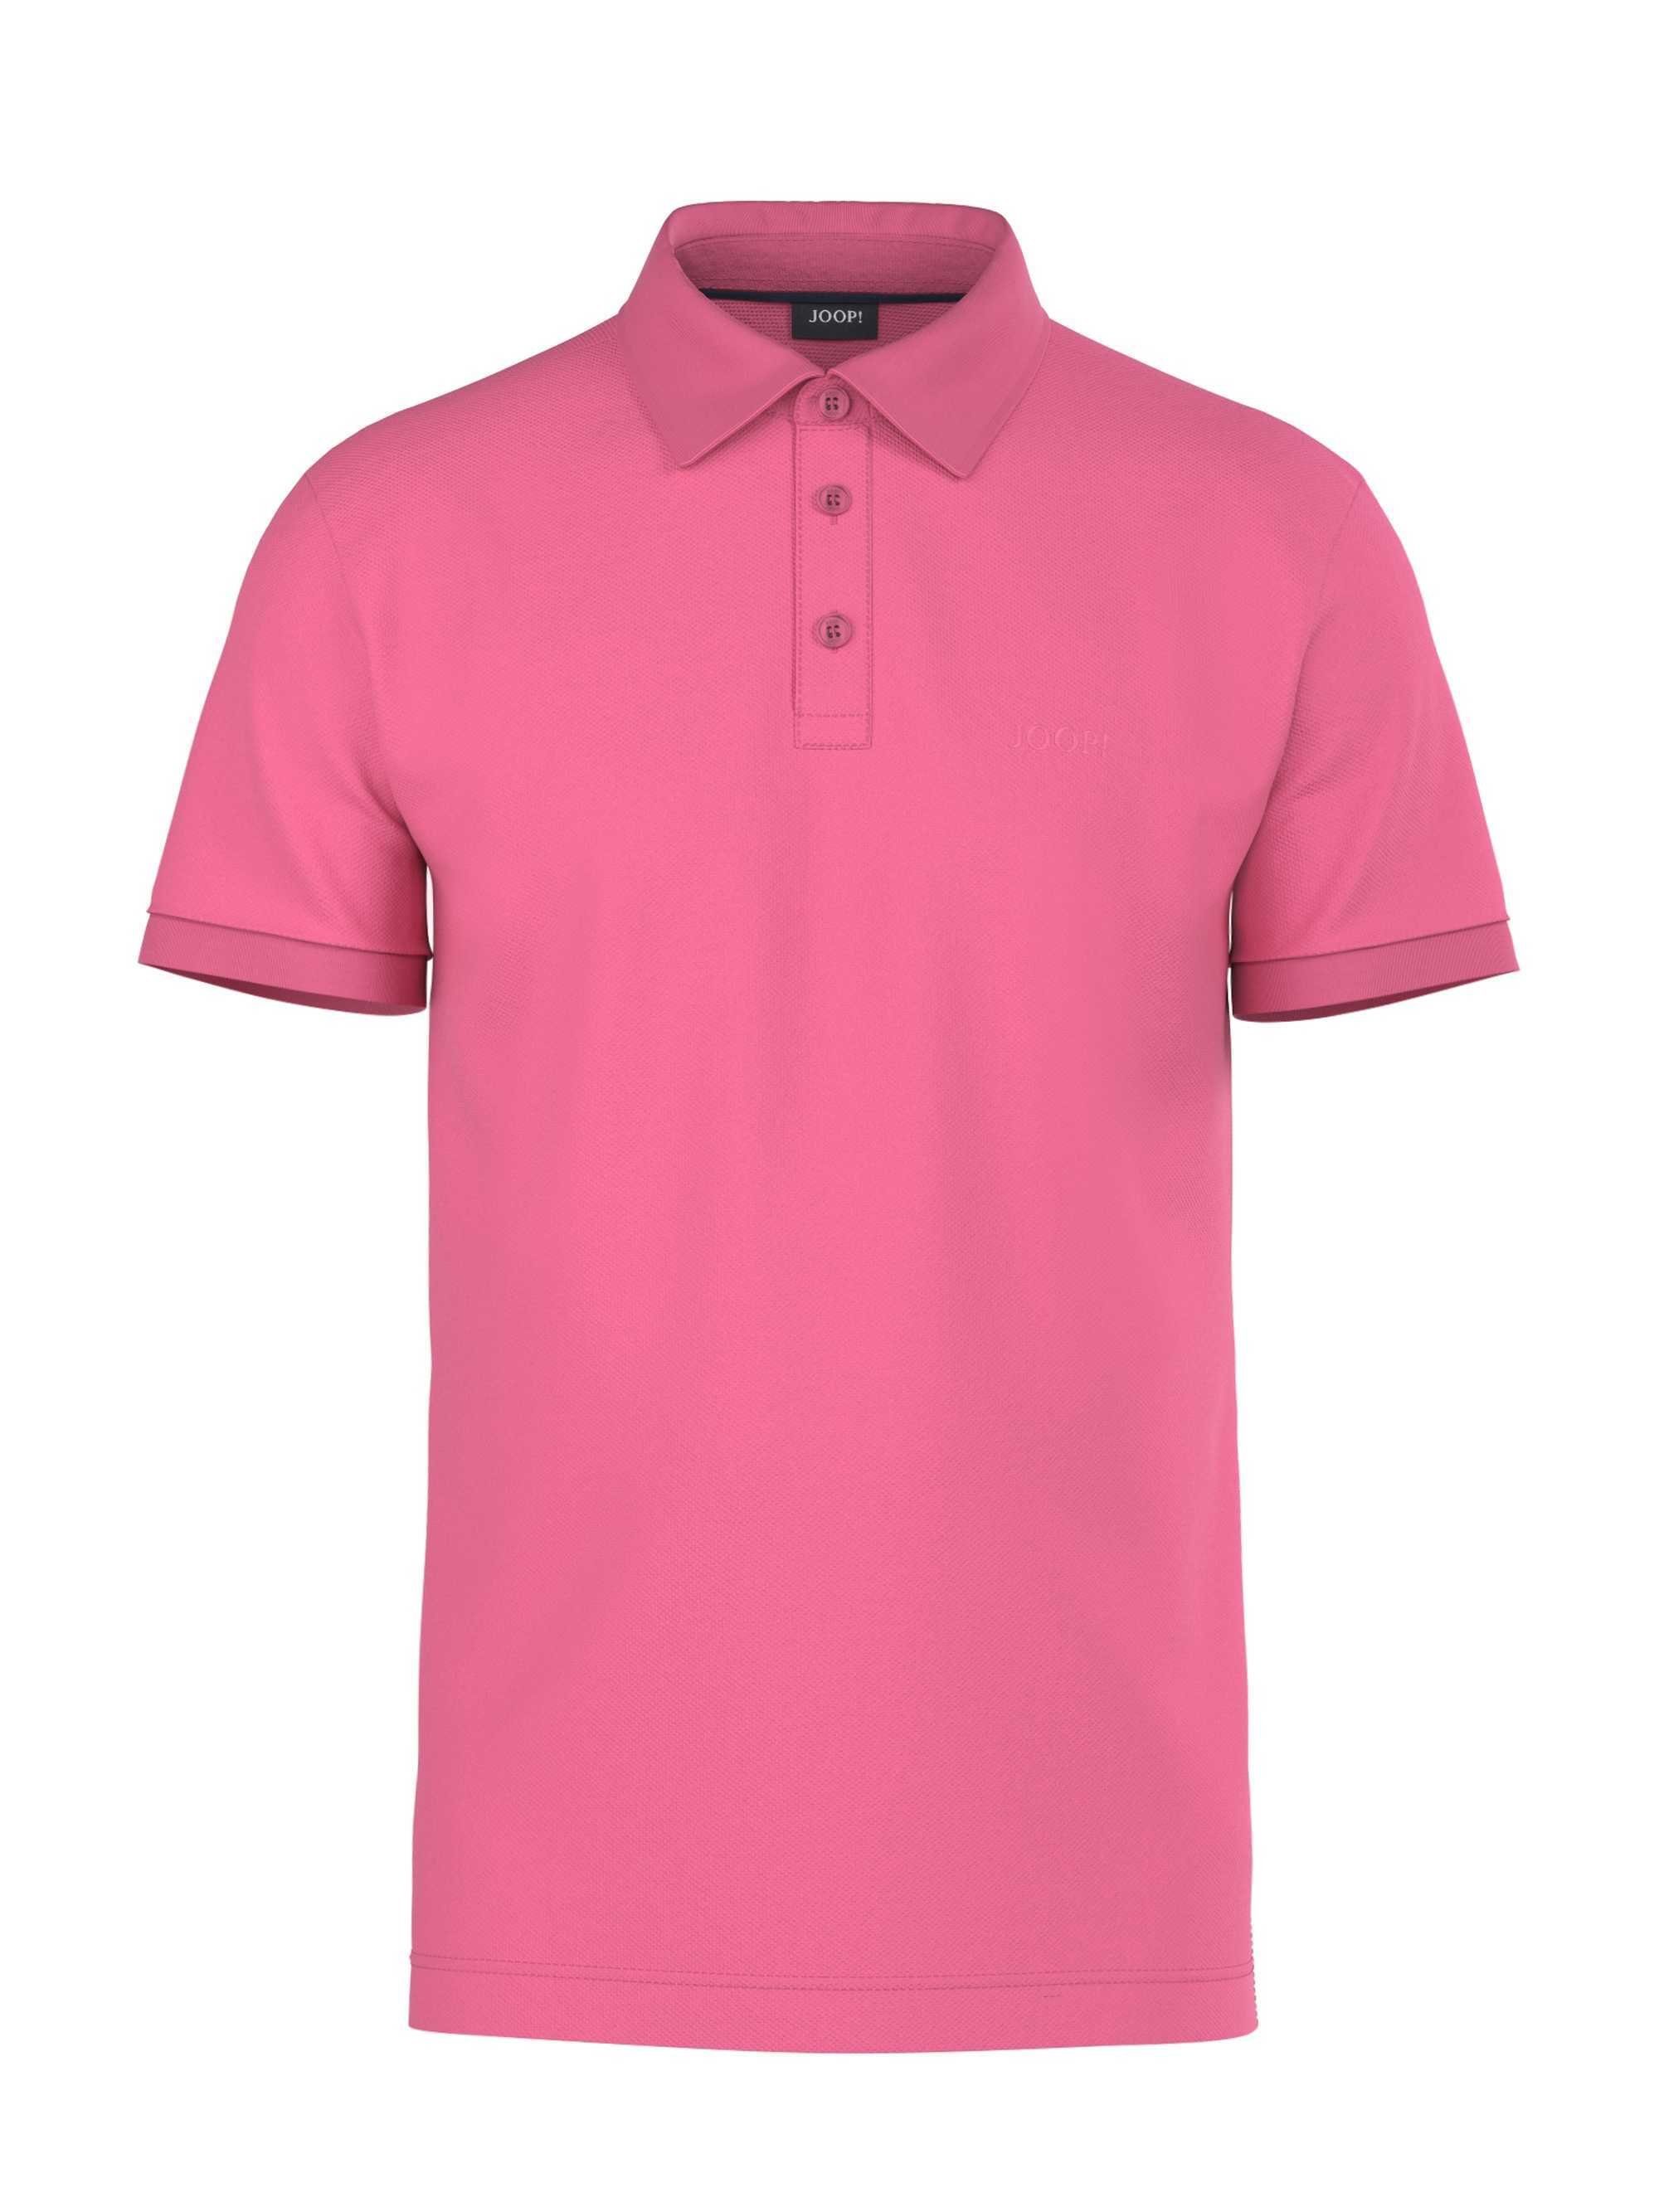 Joop! Poloshirt Herren Poloshirt - Primus, Polokragen Pink